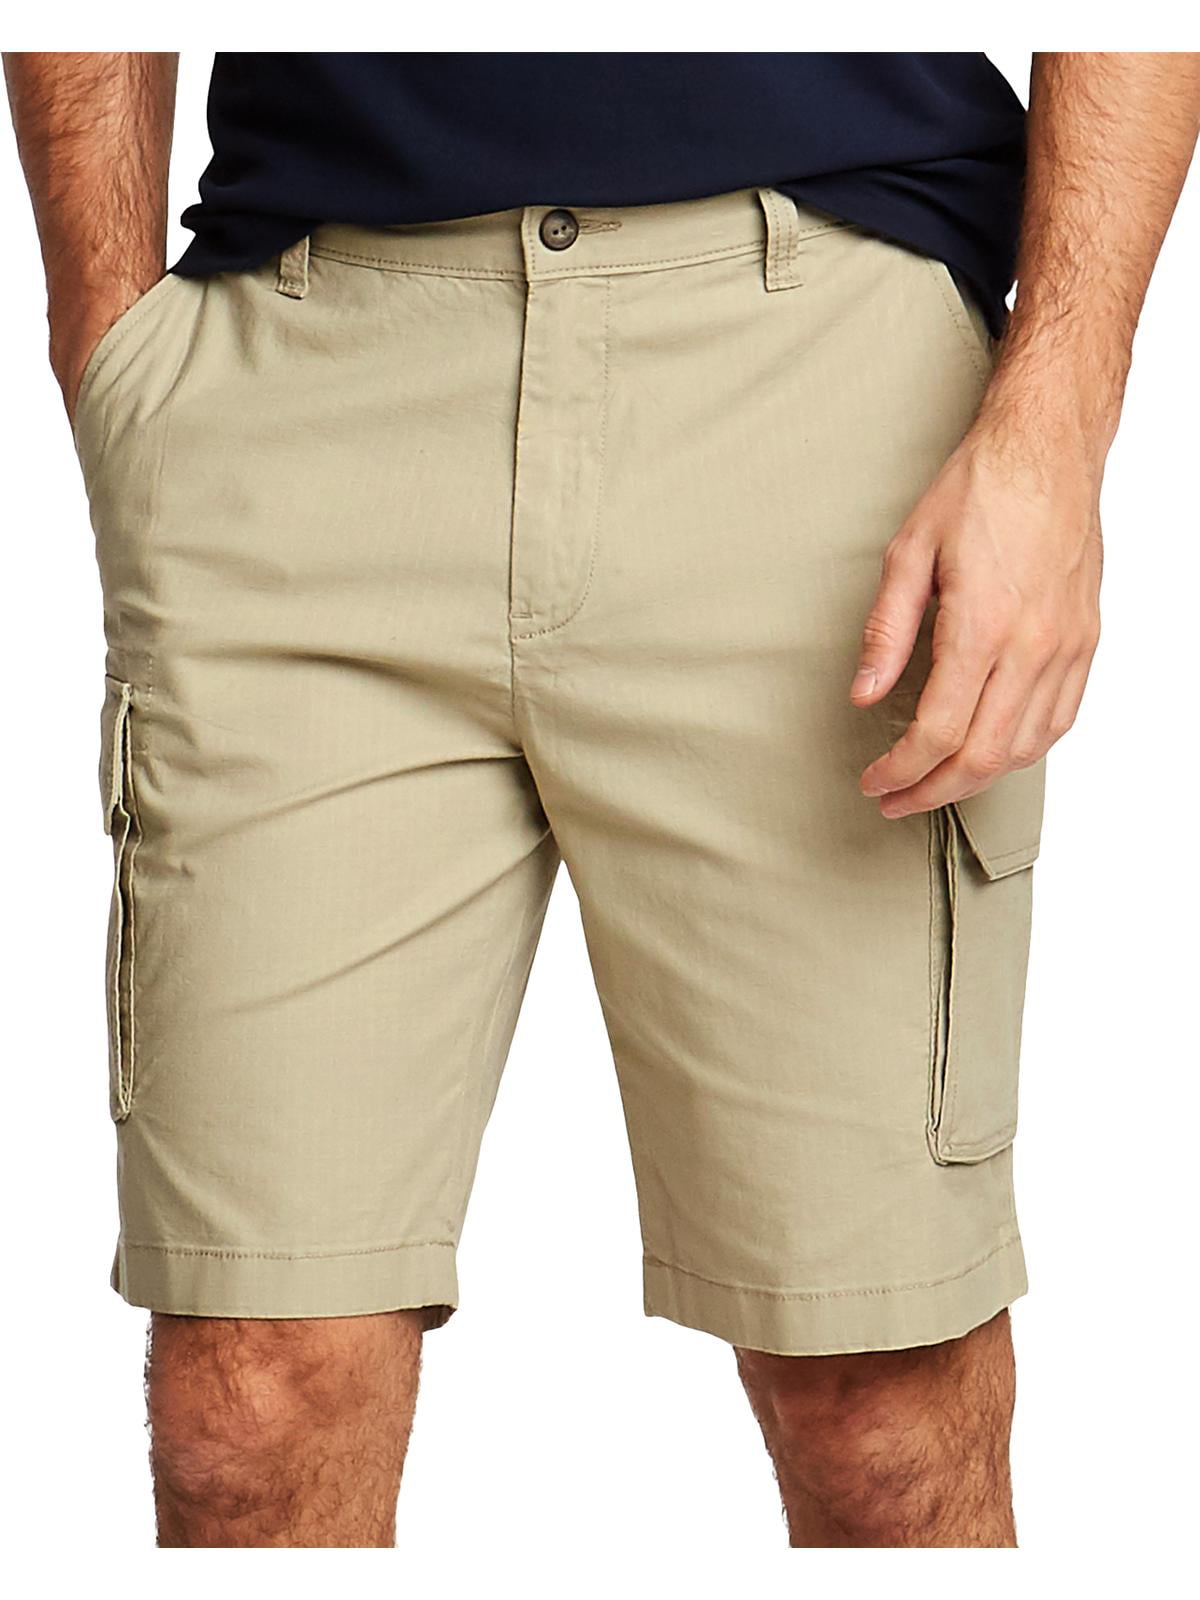 NEW Nautica Men's Above The Knee Blue Shorts w/ Belt Size 36 $59.50 Retail 